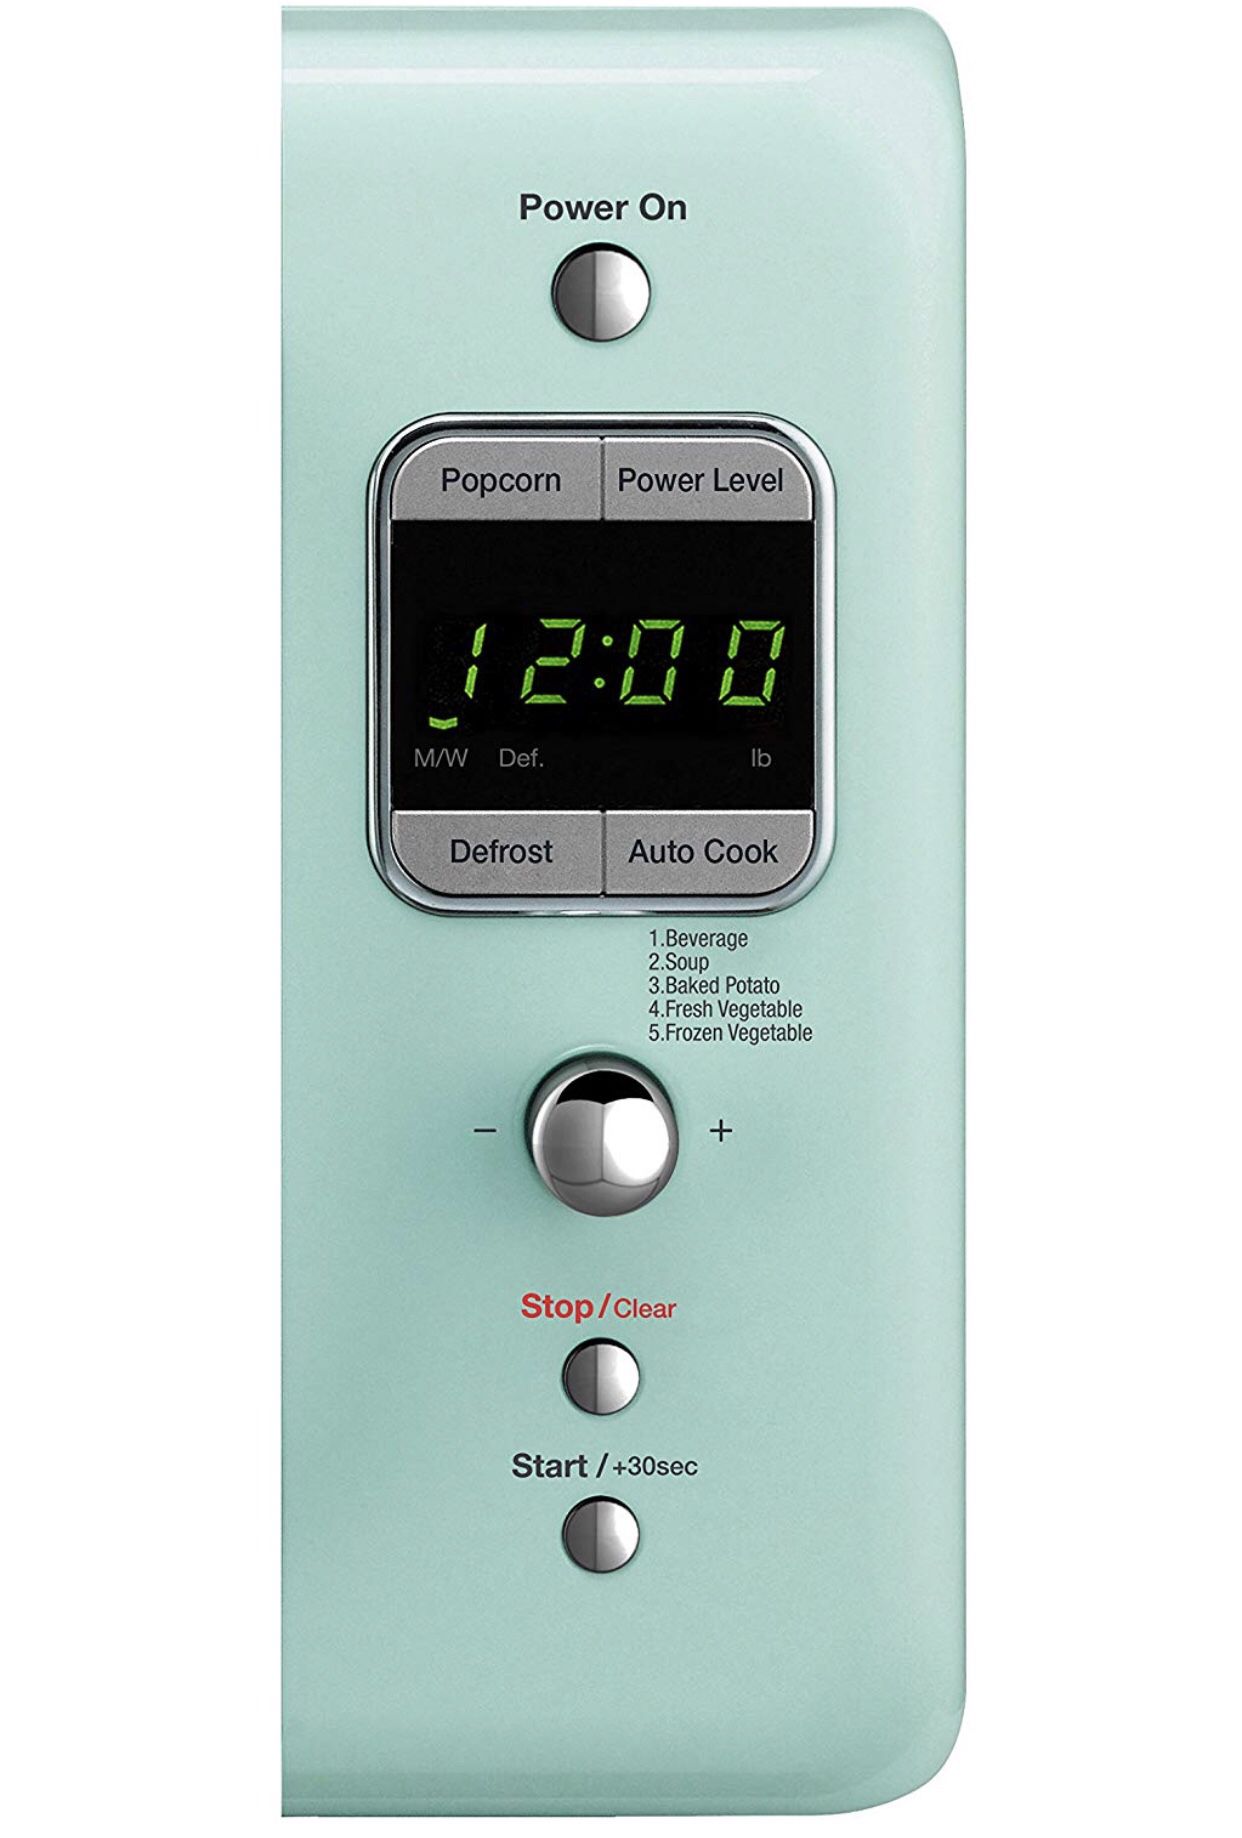 Daewoo Retro 0.7-cu ft 700-Watt Countertop Microwave (Mint Green) at